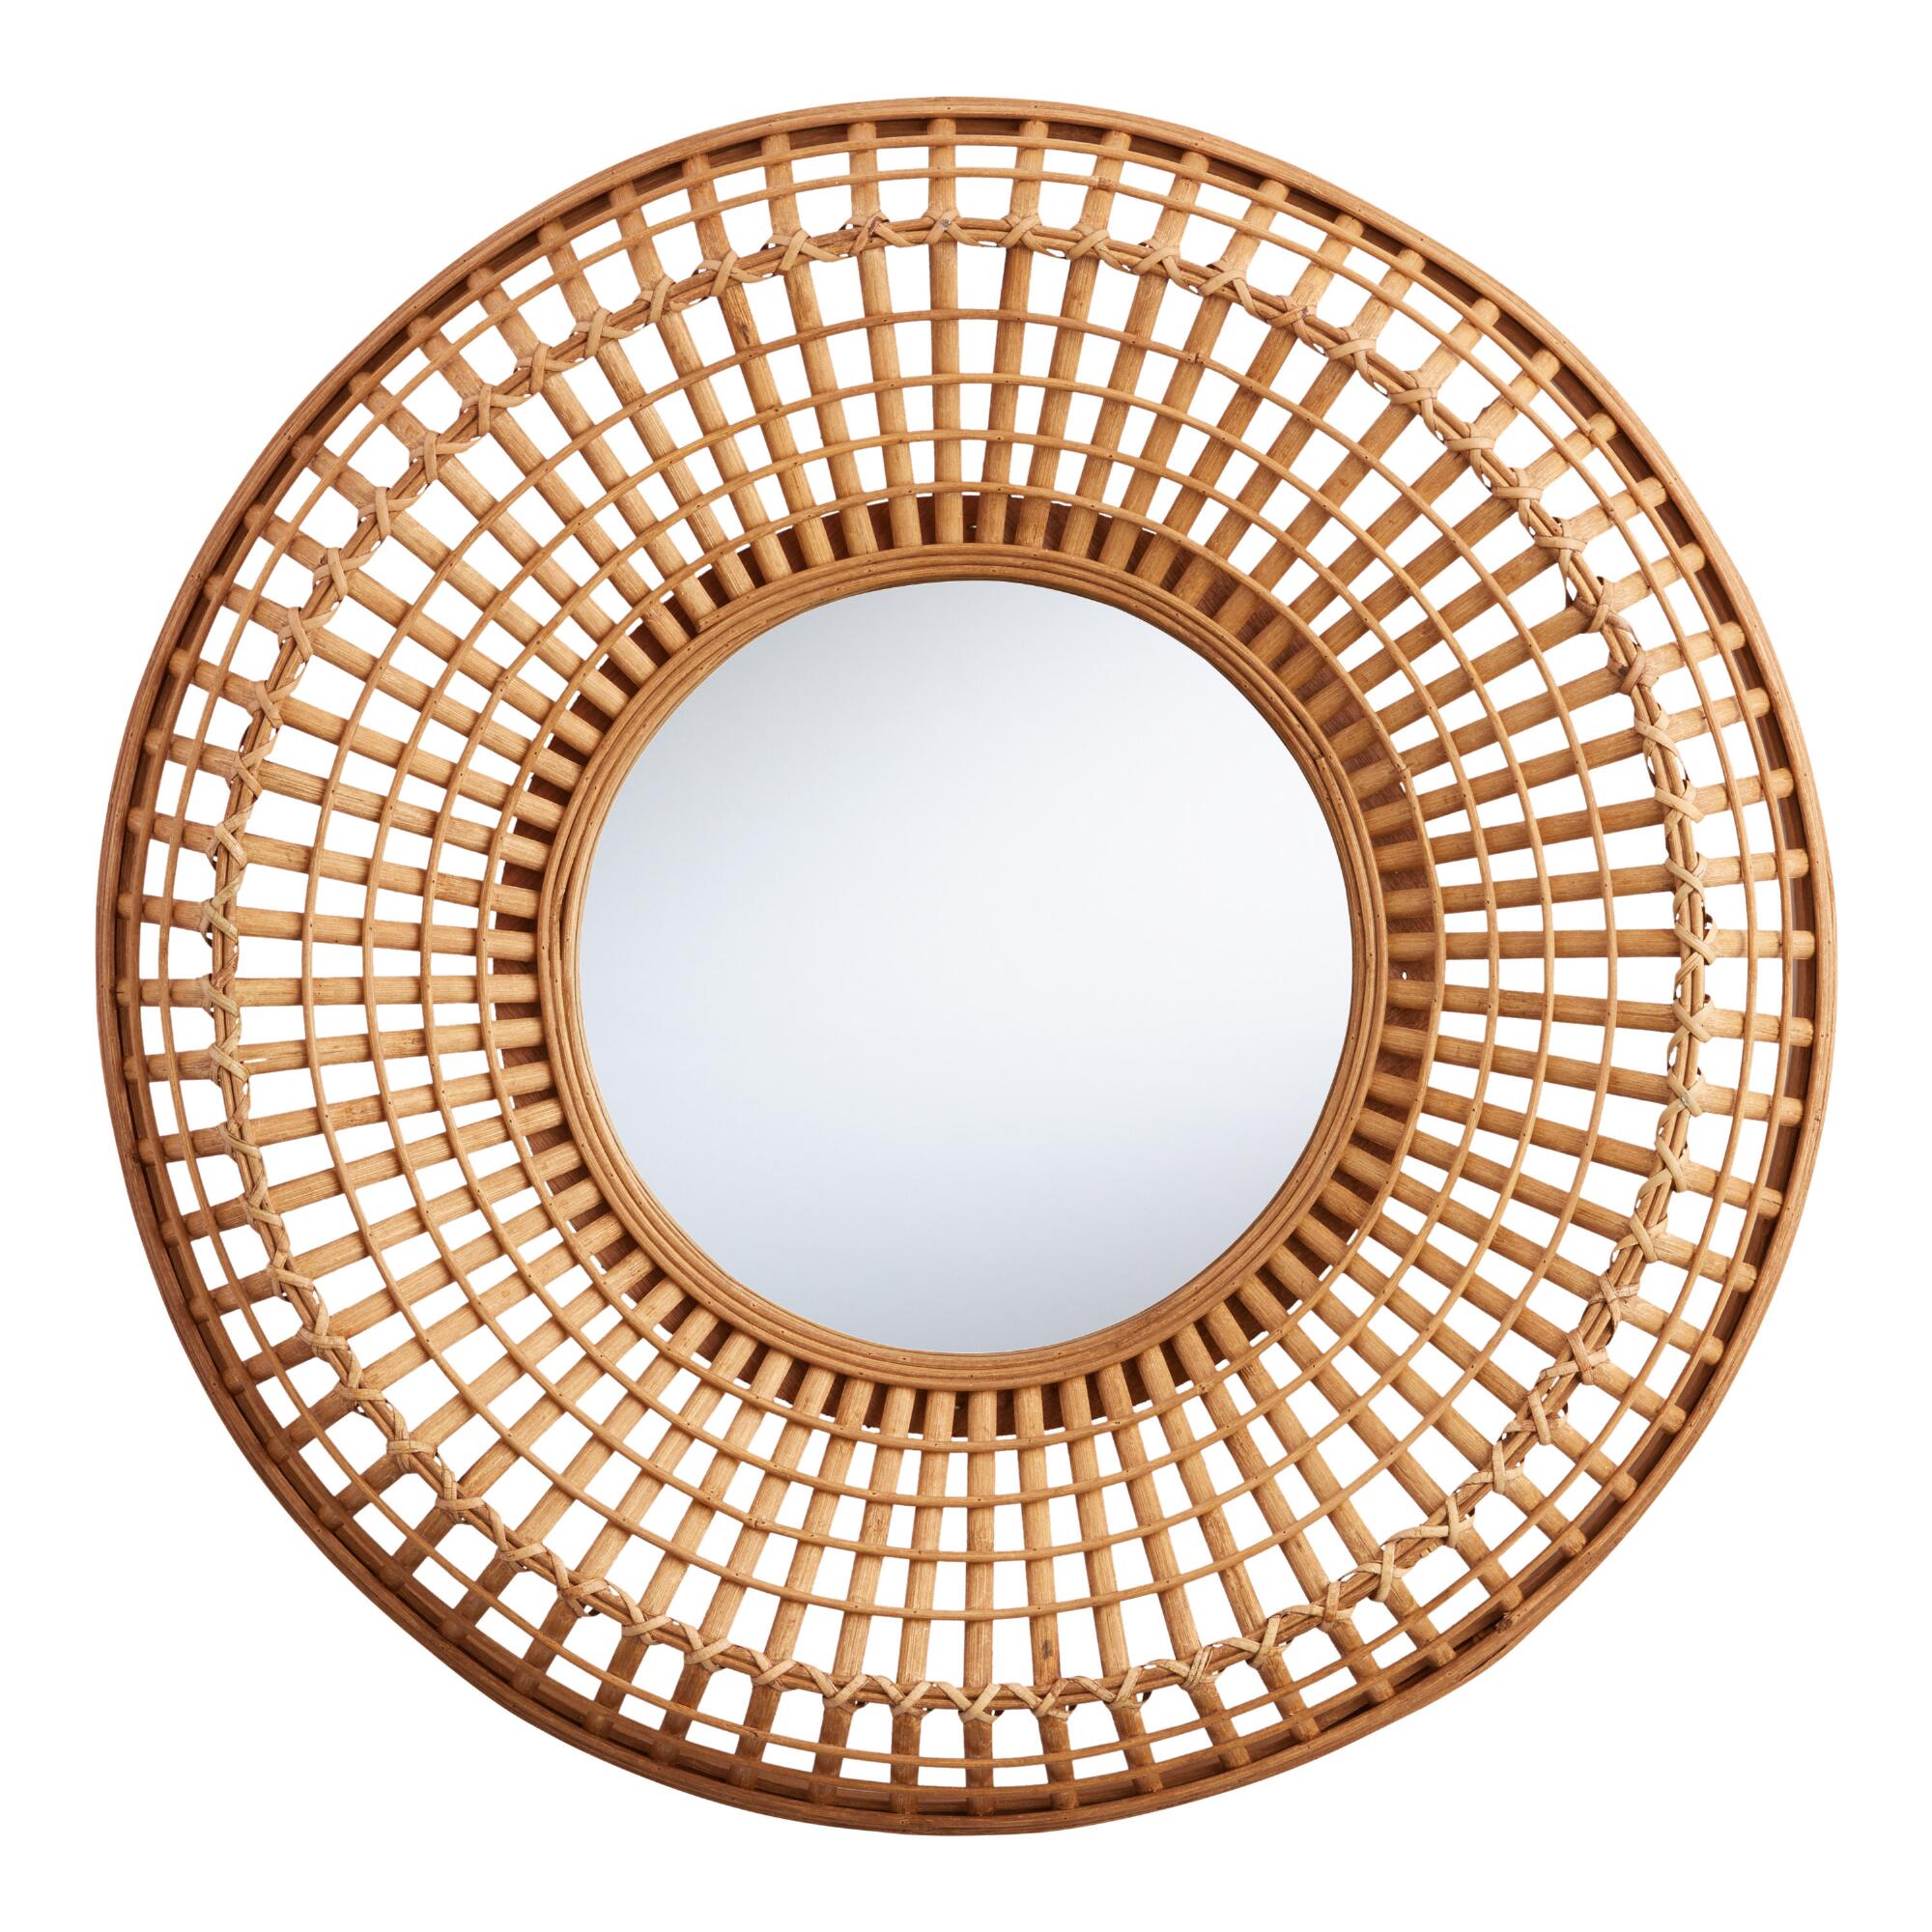 Round Natural Bamboo Woven Mirror - Natural Fiber - Medium (36" & under) by World Market